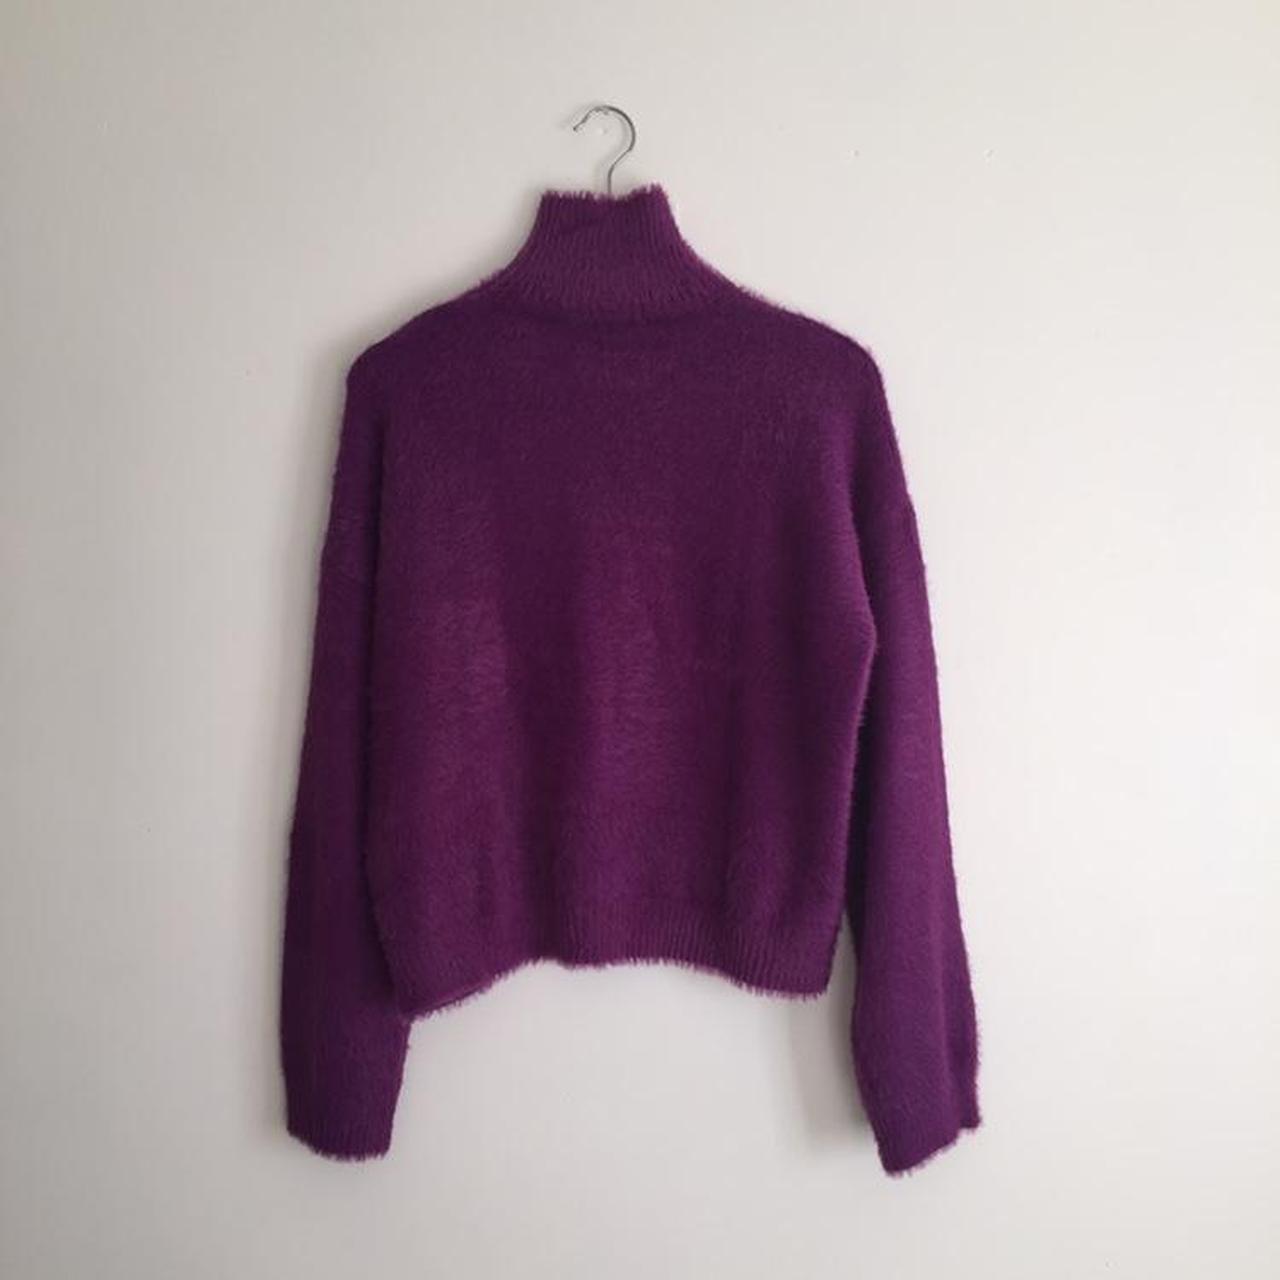 Zara Purple Knit Jumper Size S. Brand new with... - Depop